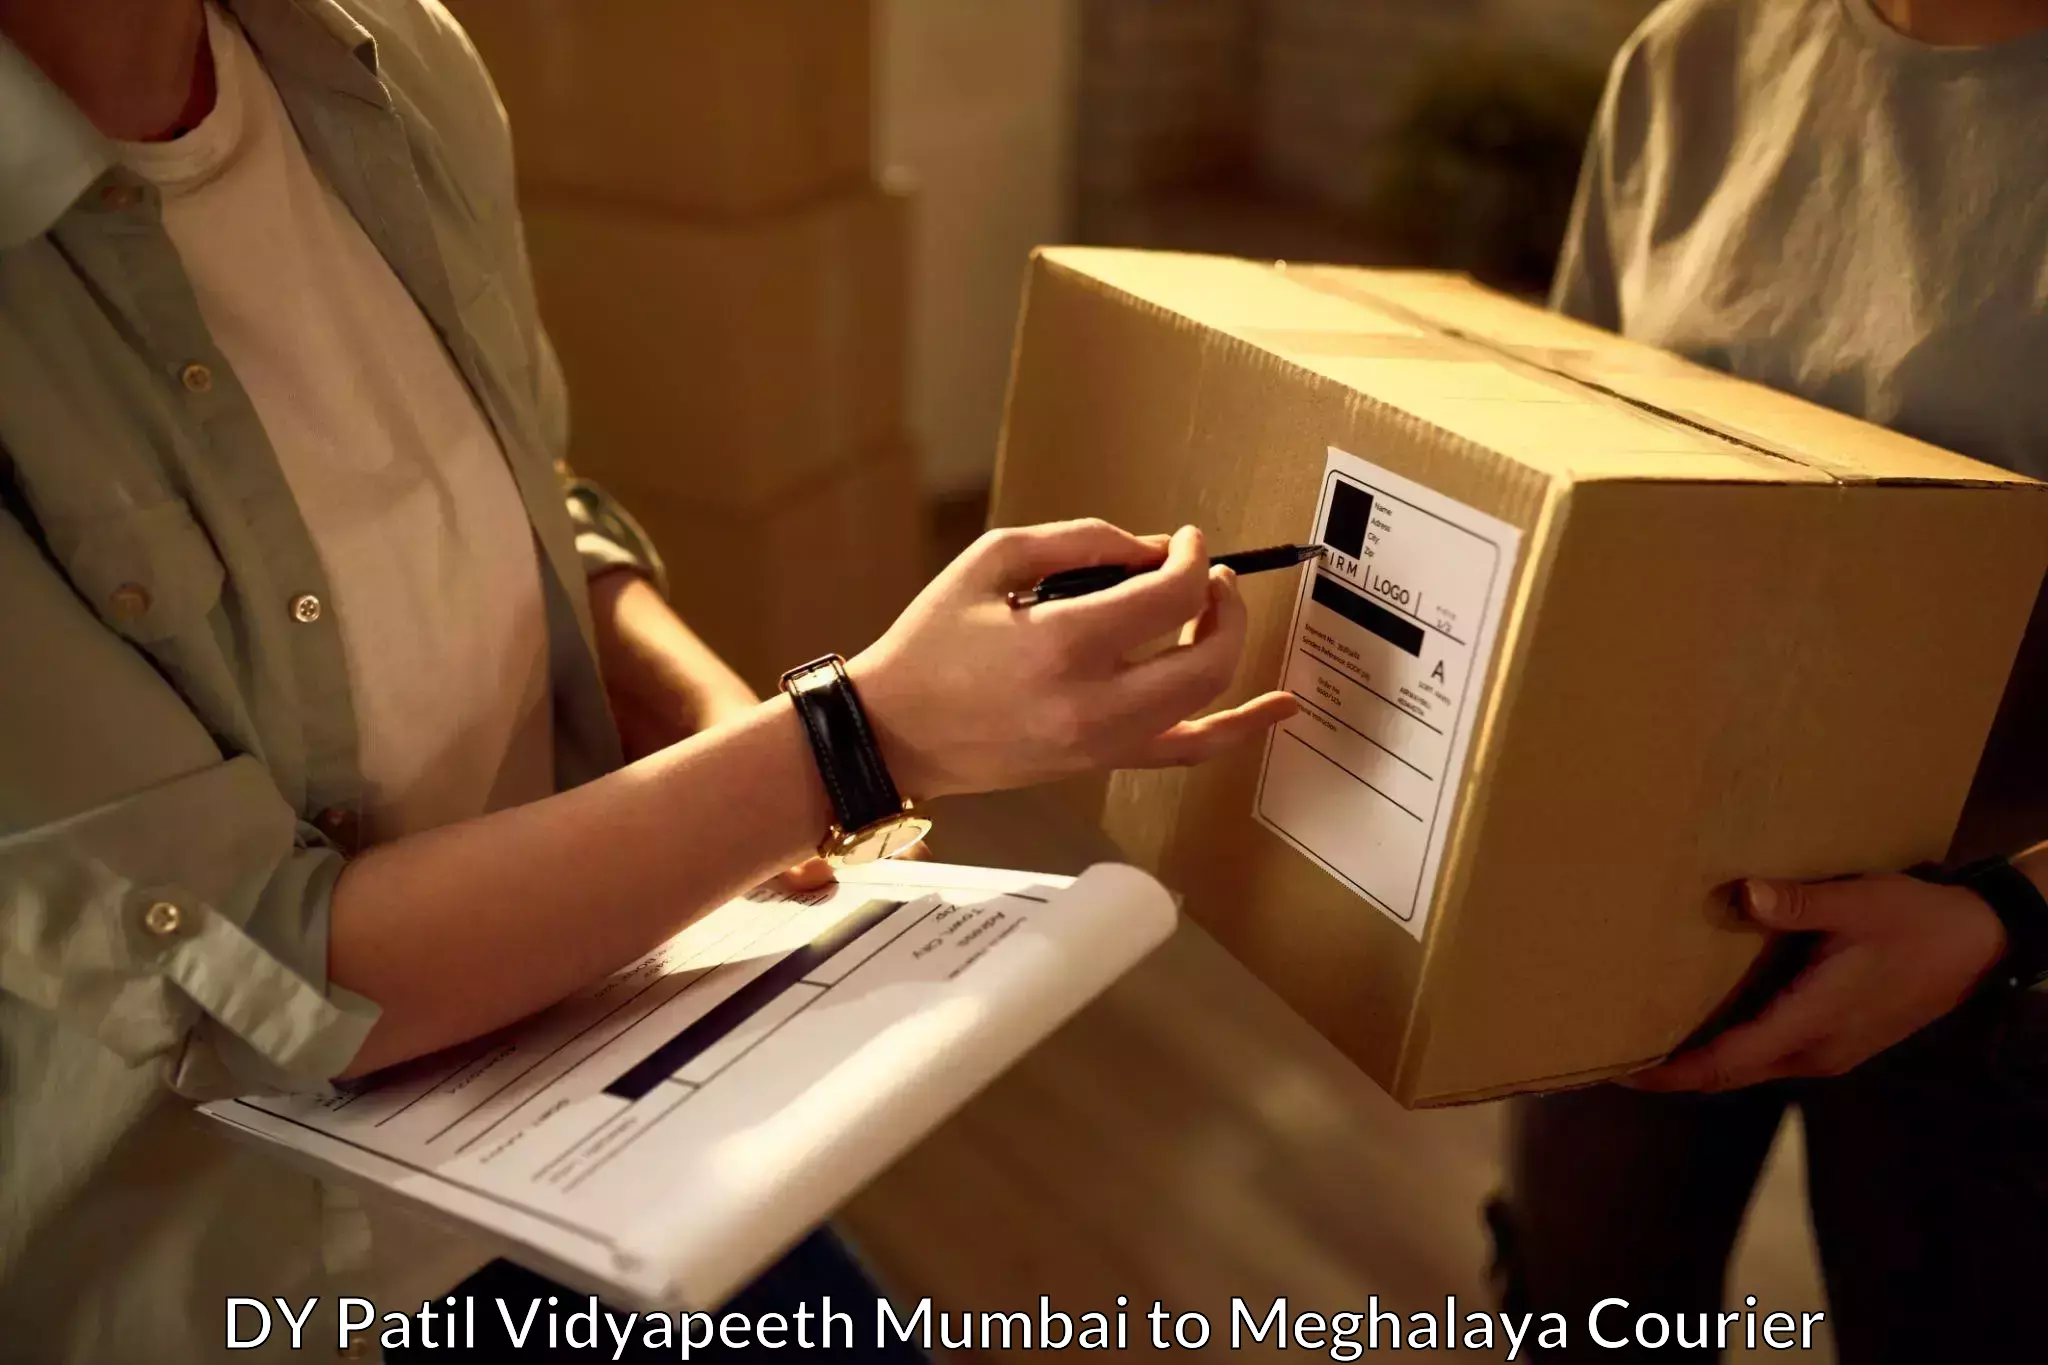 Express logistics providers DY Patil Vidyapeeth Mumbai to Meghalaya